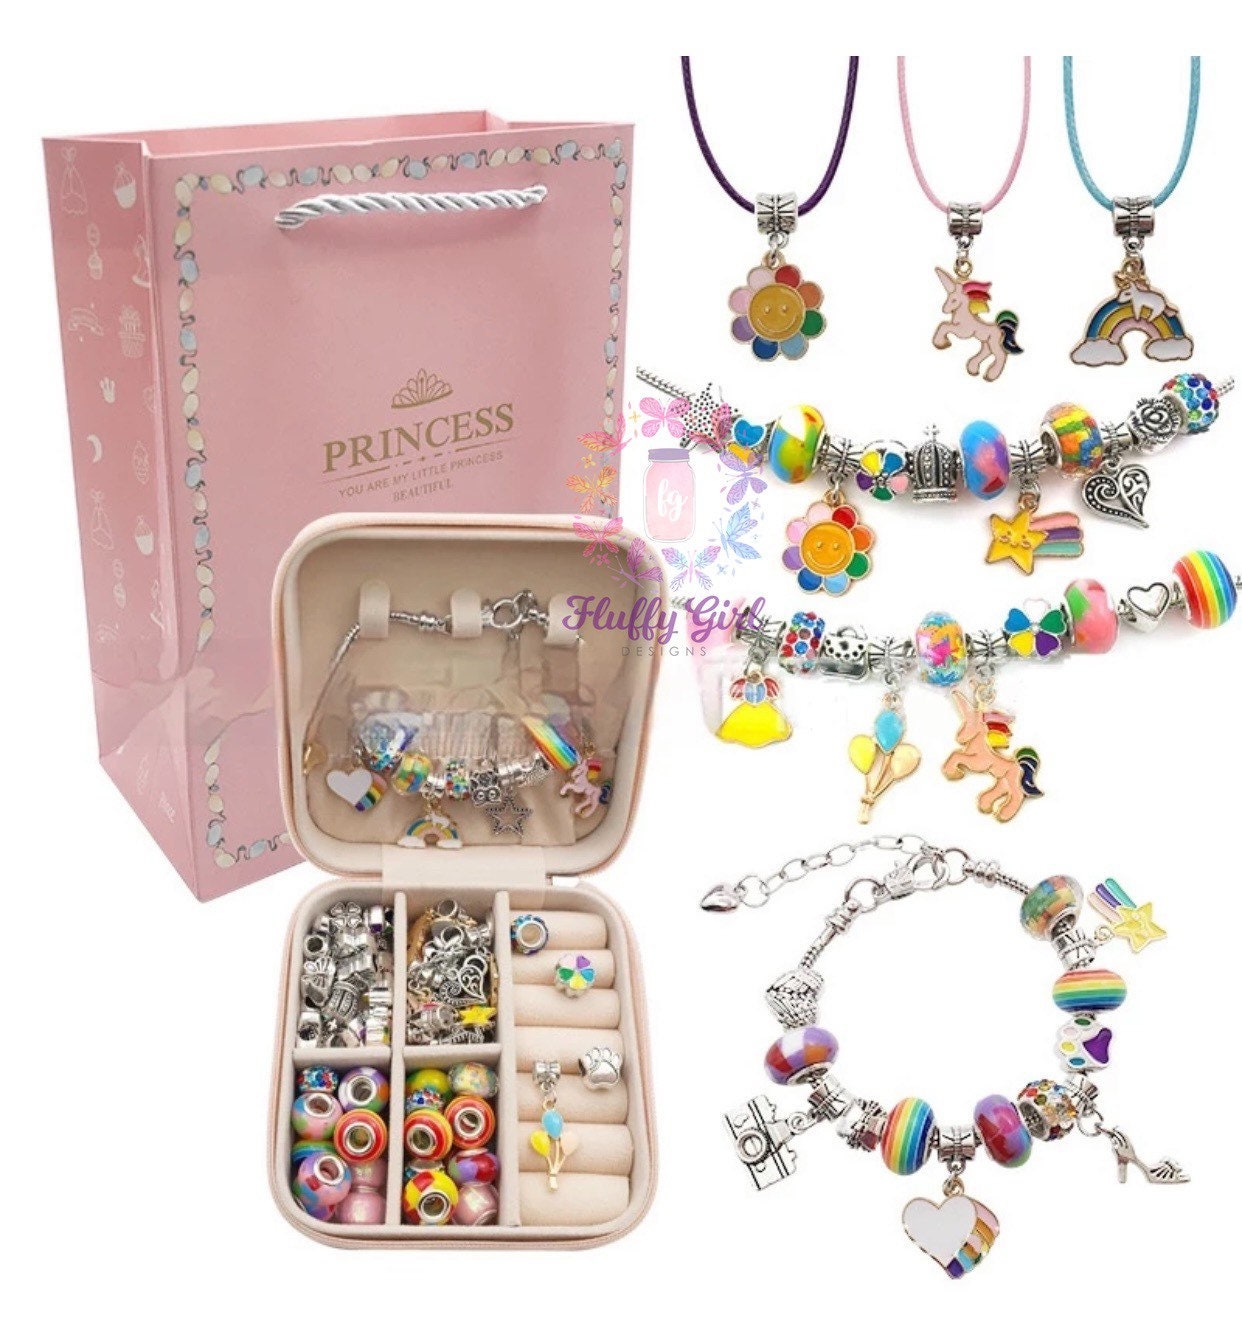 600PCS Bracelet Making Kit, Beads for Bracelets Making Pearl Bead for  Jewelry Making with Charm Rainbow Mermaid,Friendship Bracelets Beads Kit  for